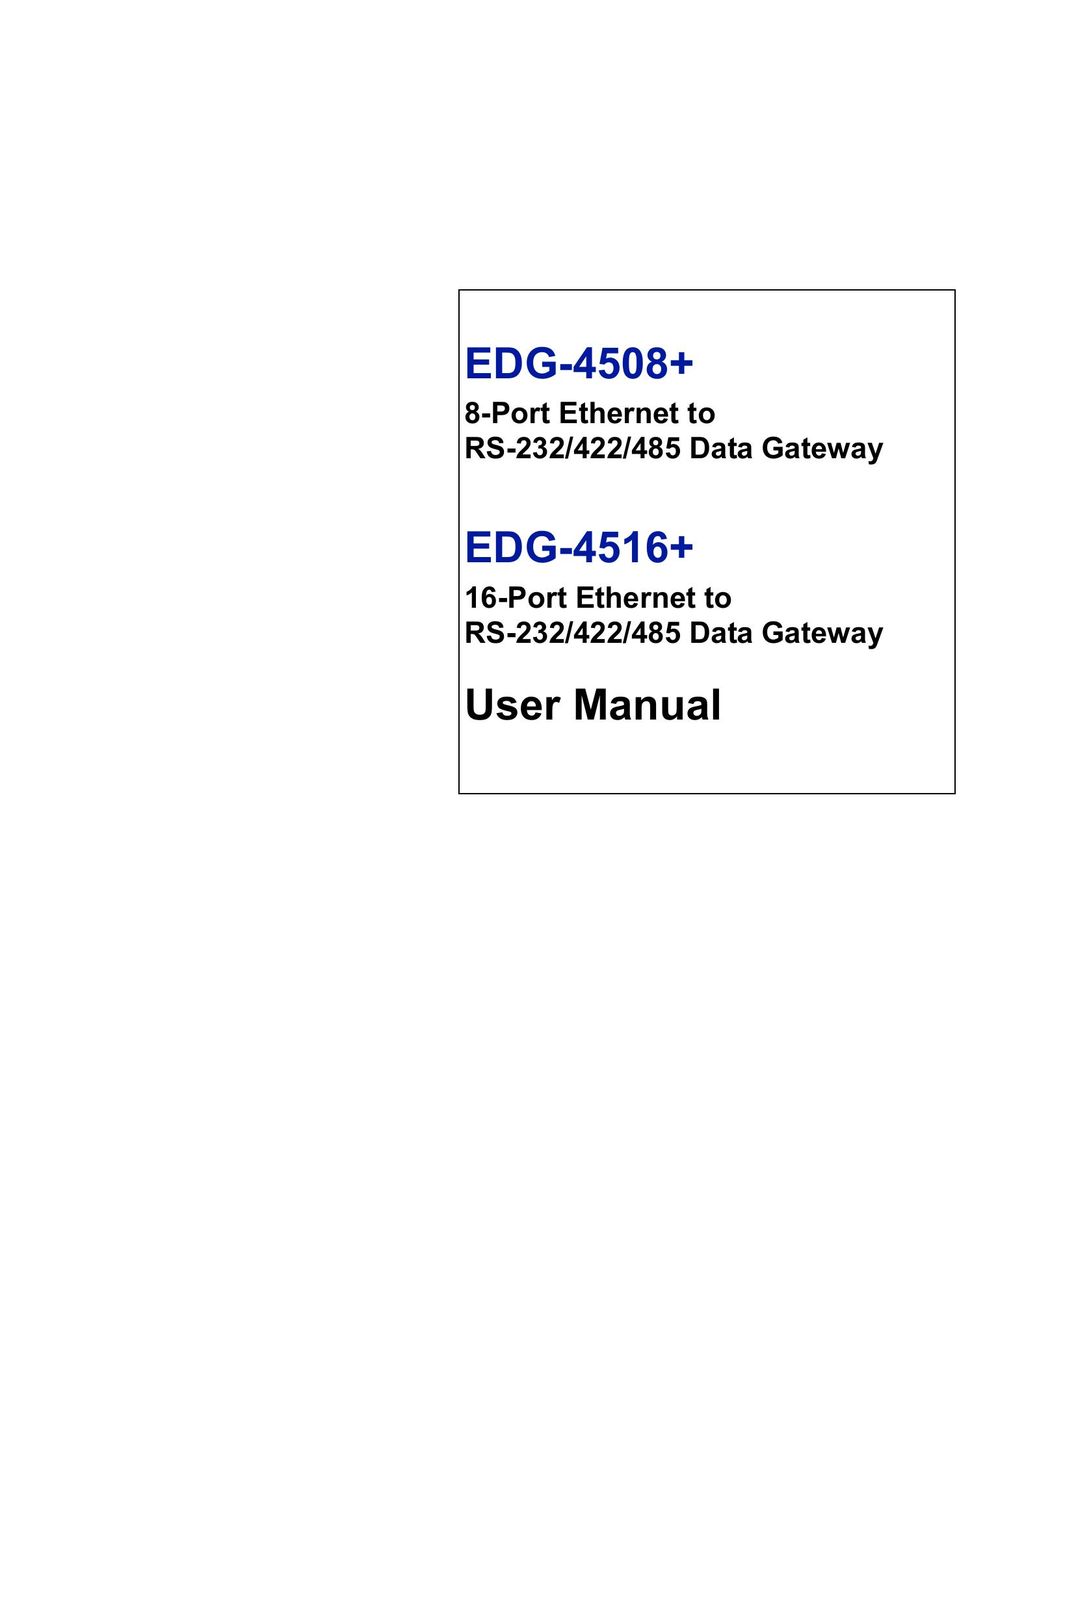 Vicks EDG-4516+ Network Router User Manual